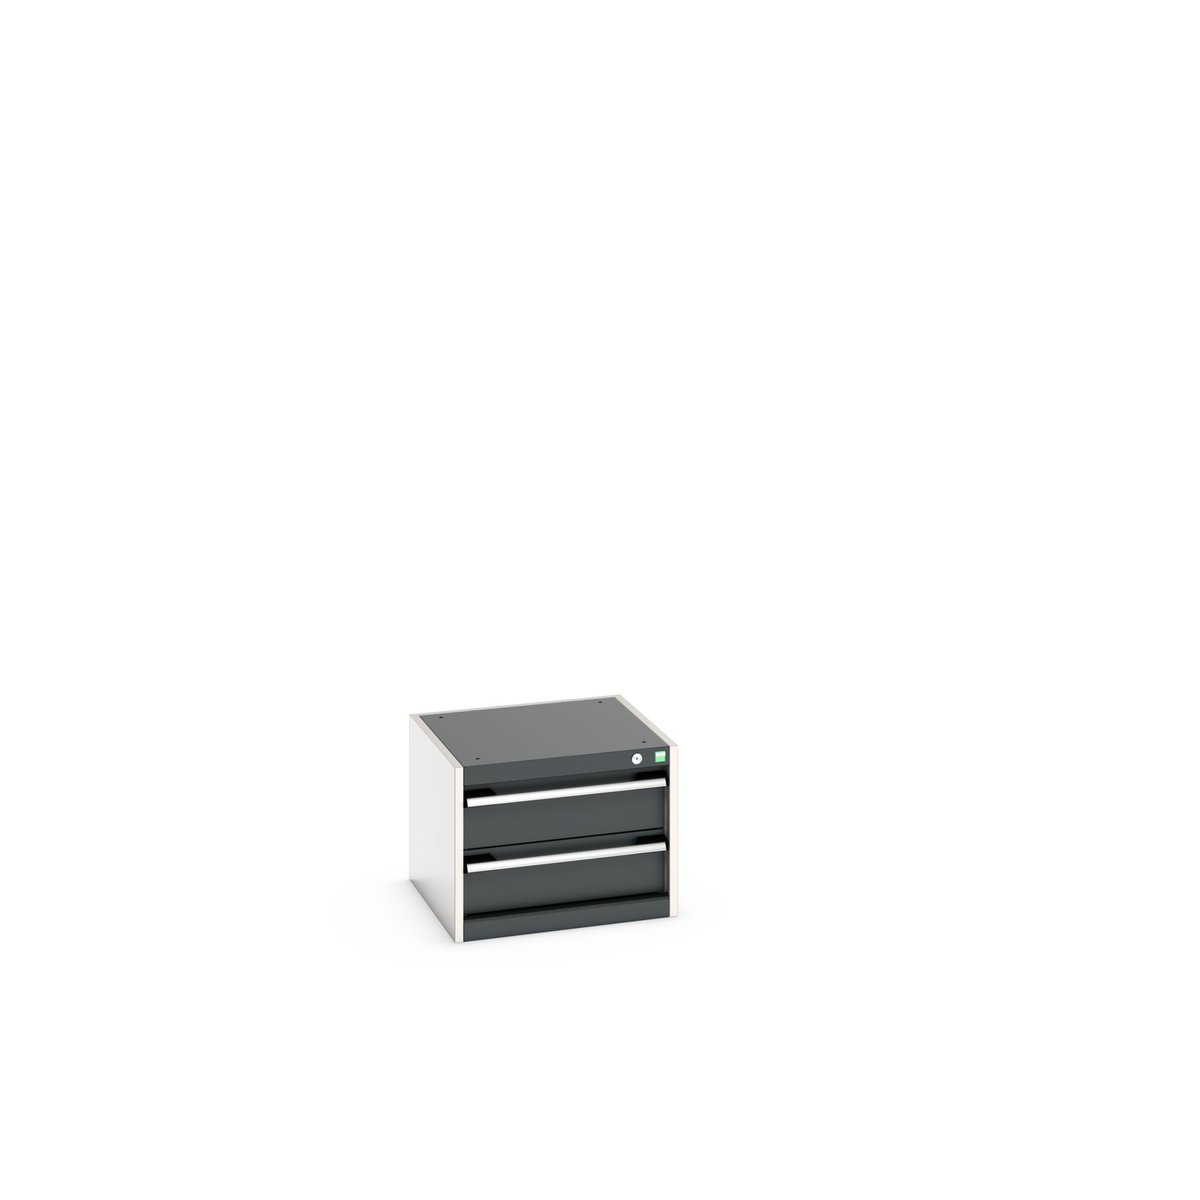 40010005. - cubio drawer cabinet